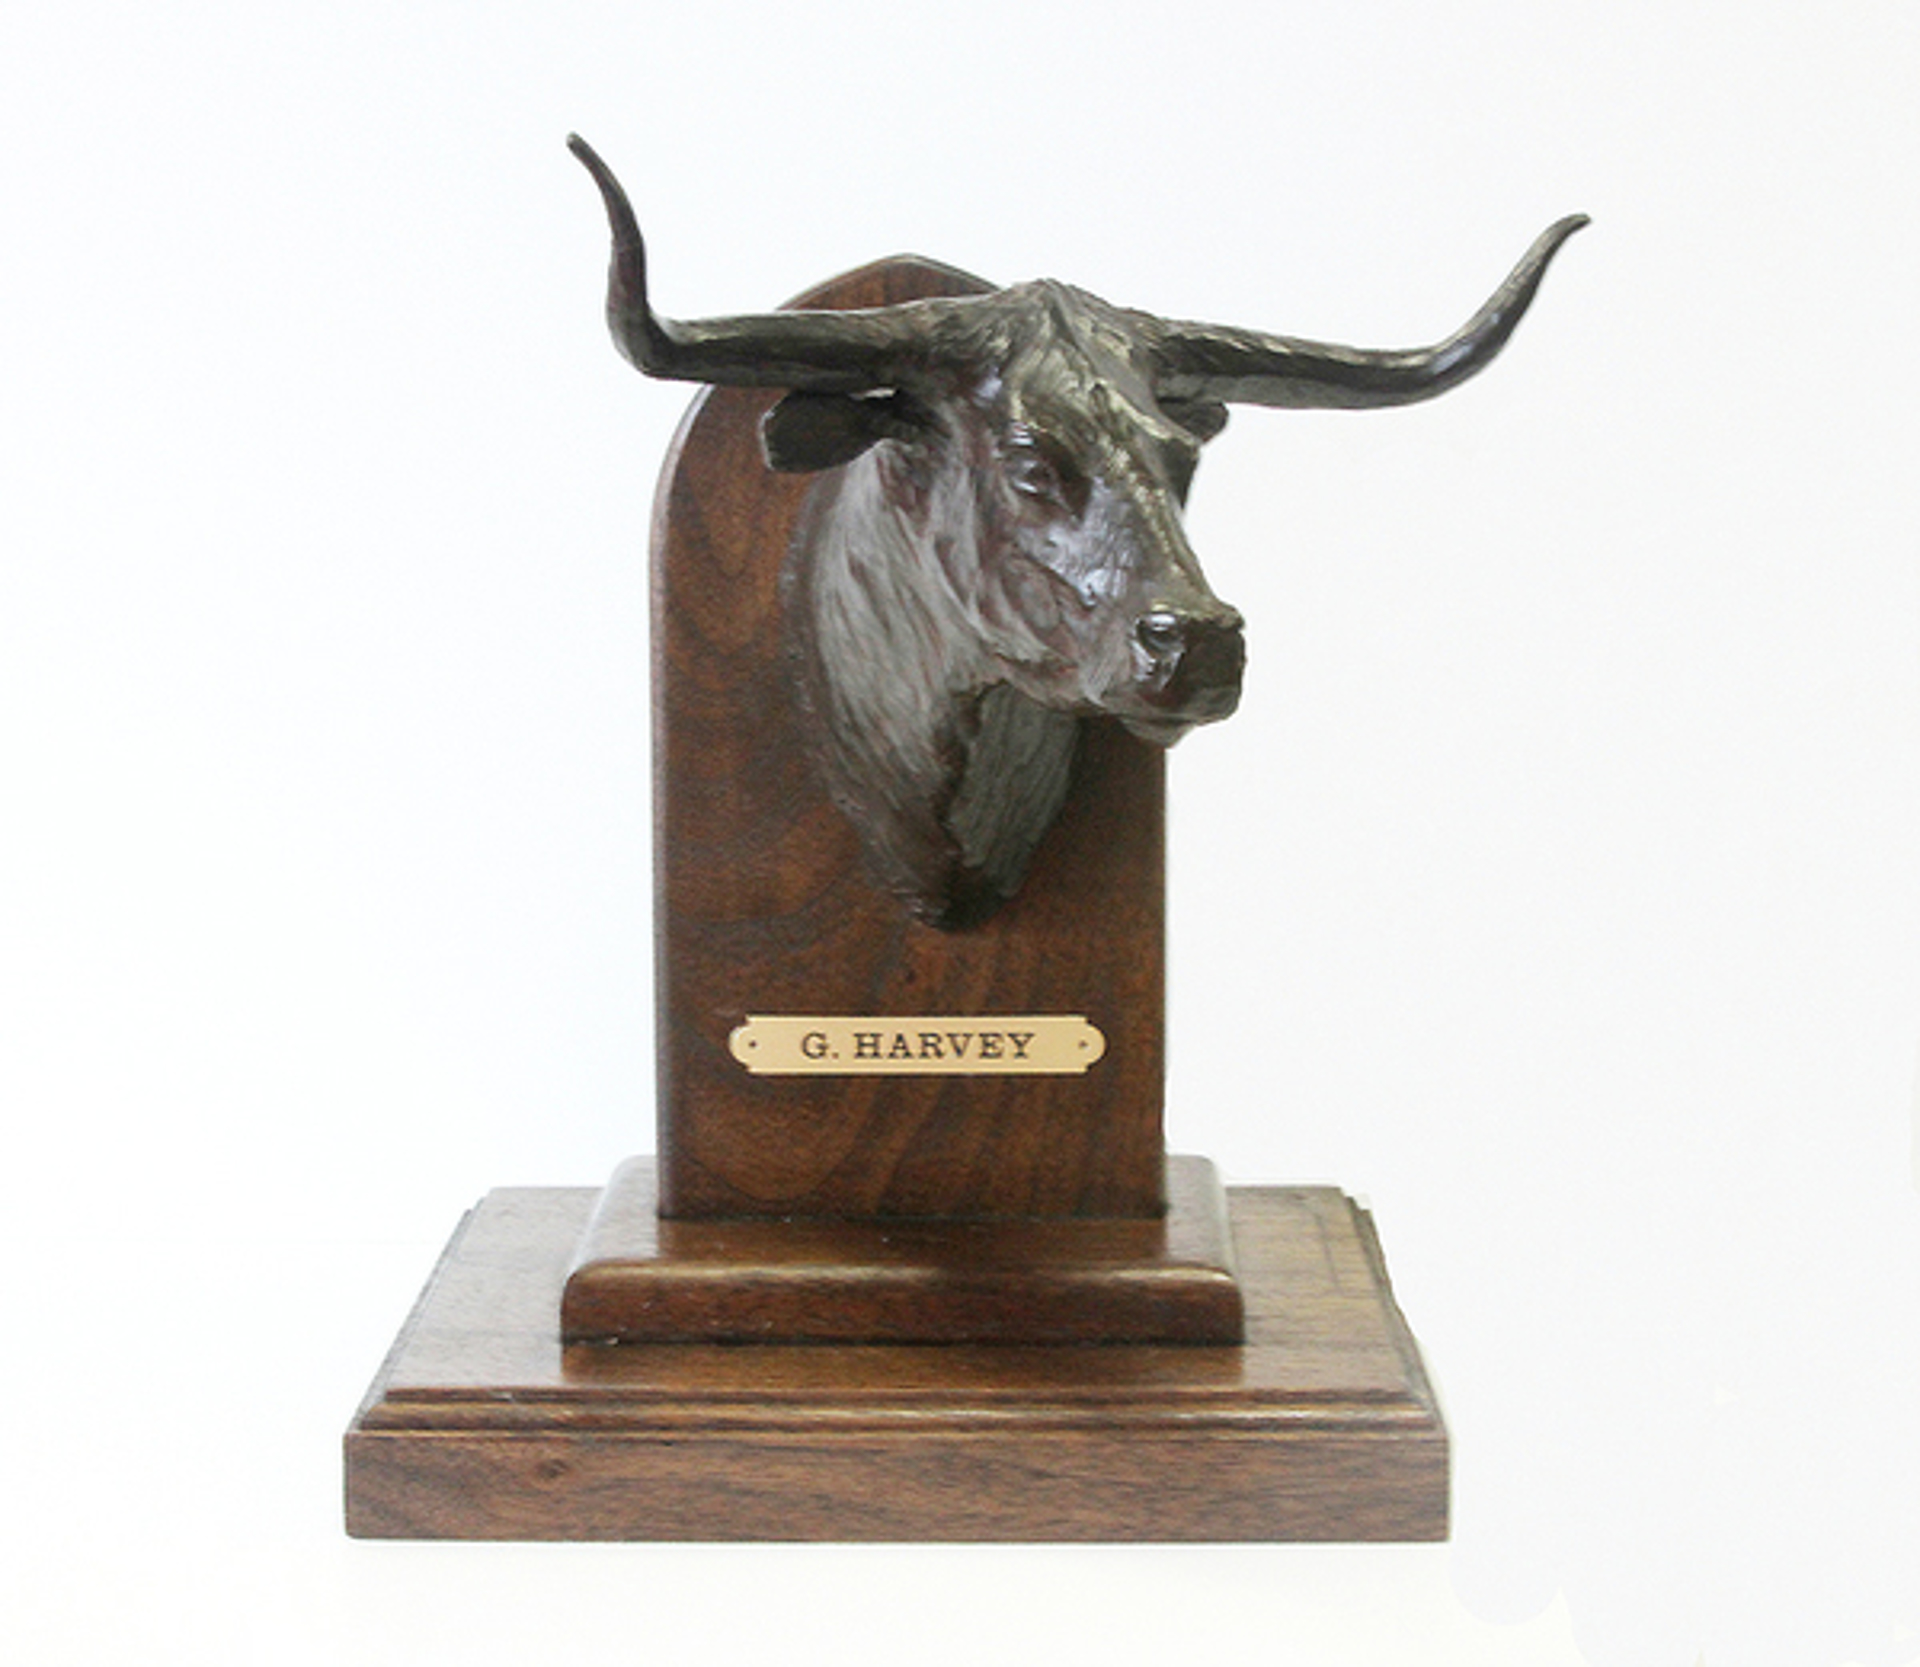 A Texas Breed by G. Harvey